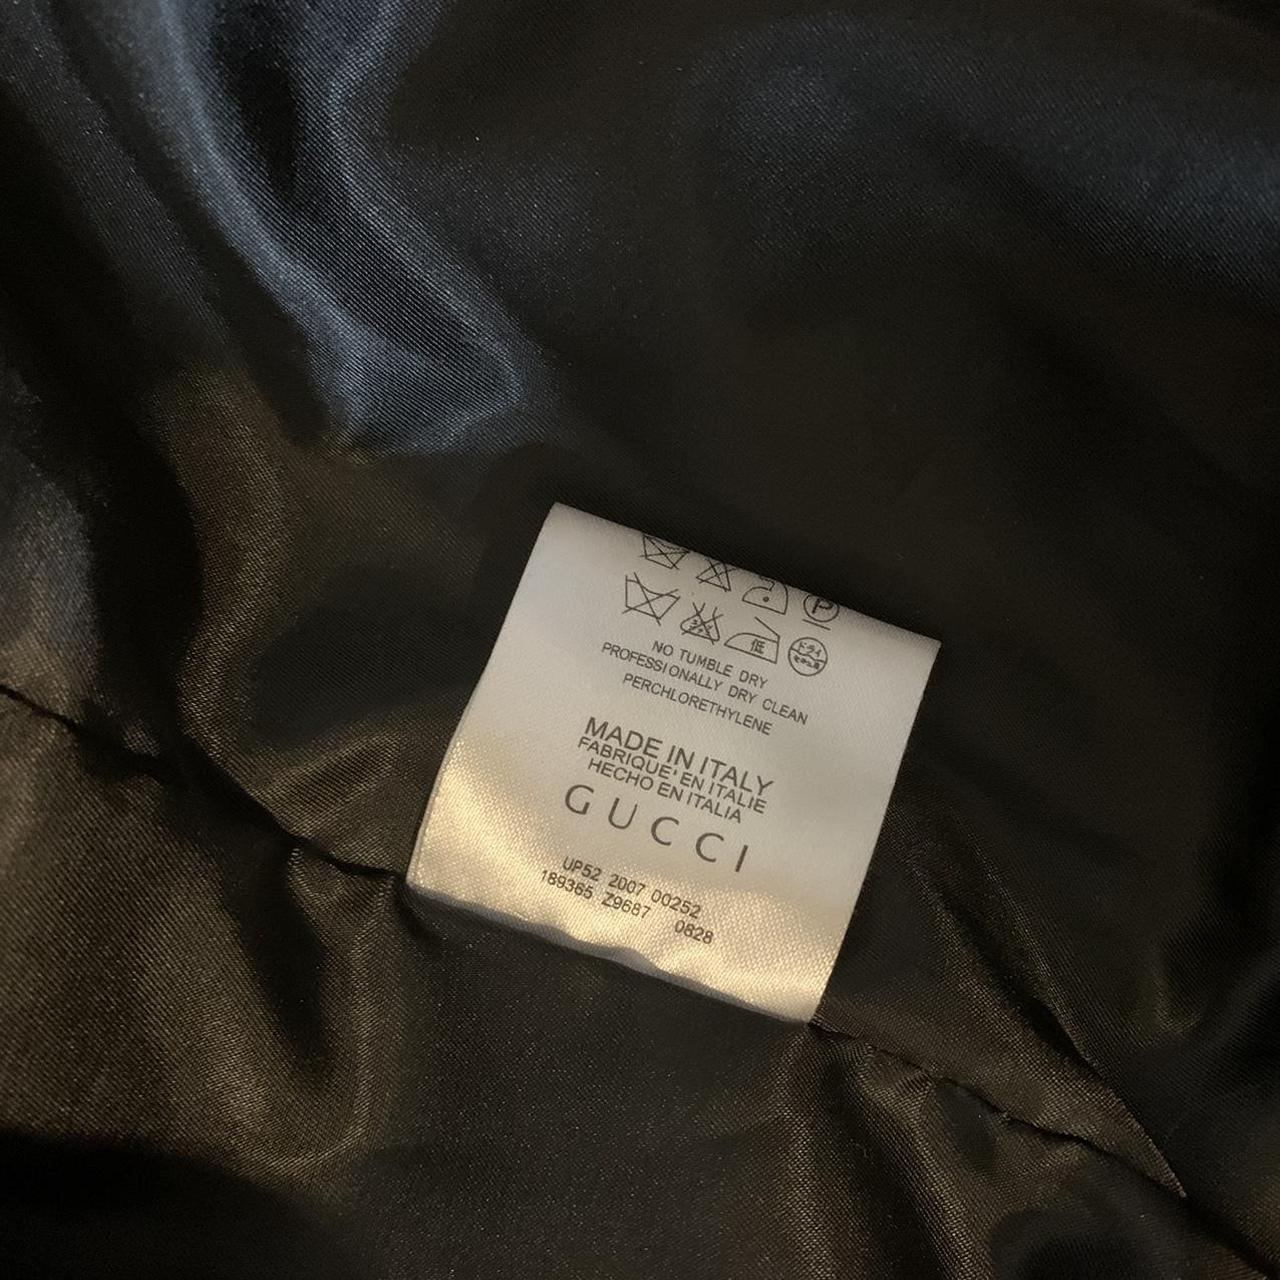 Gucci windbreaker jacket with original G print in - Depop